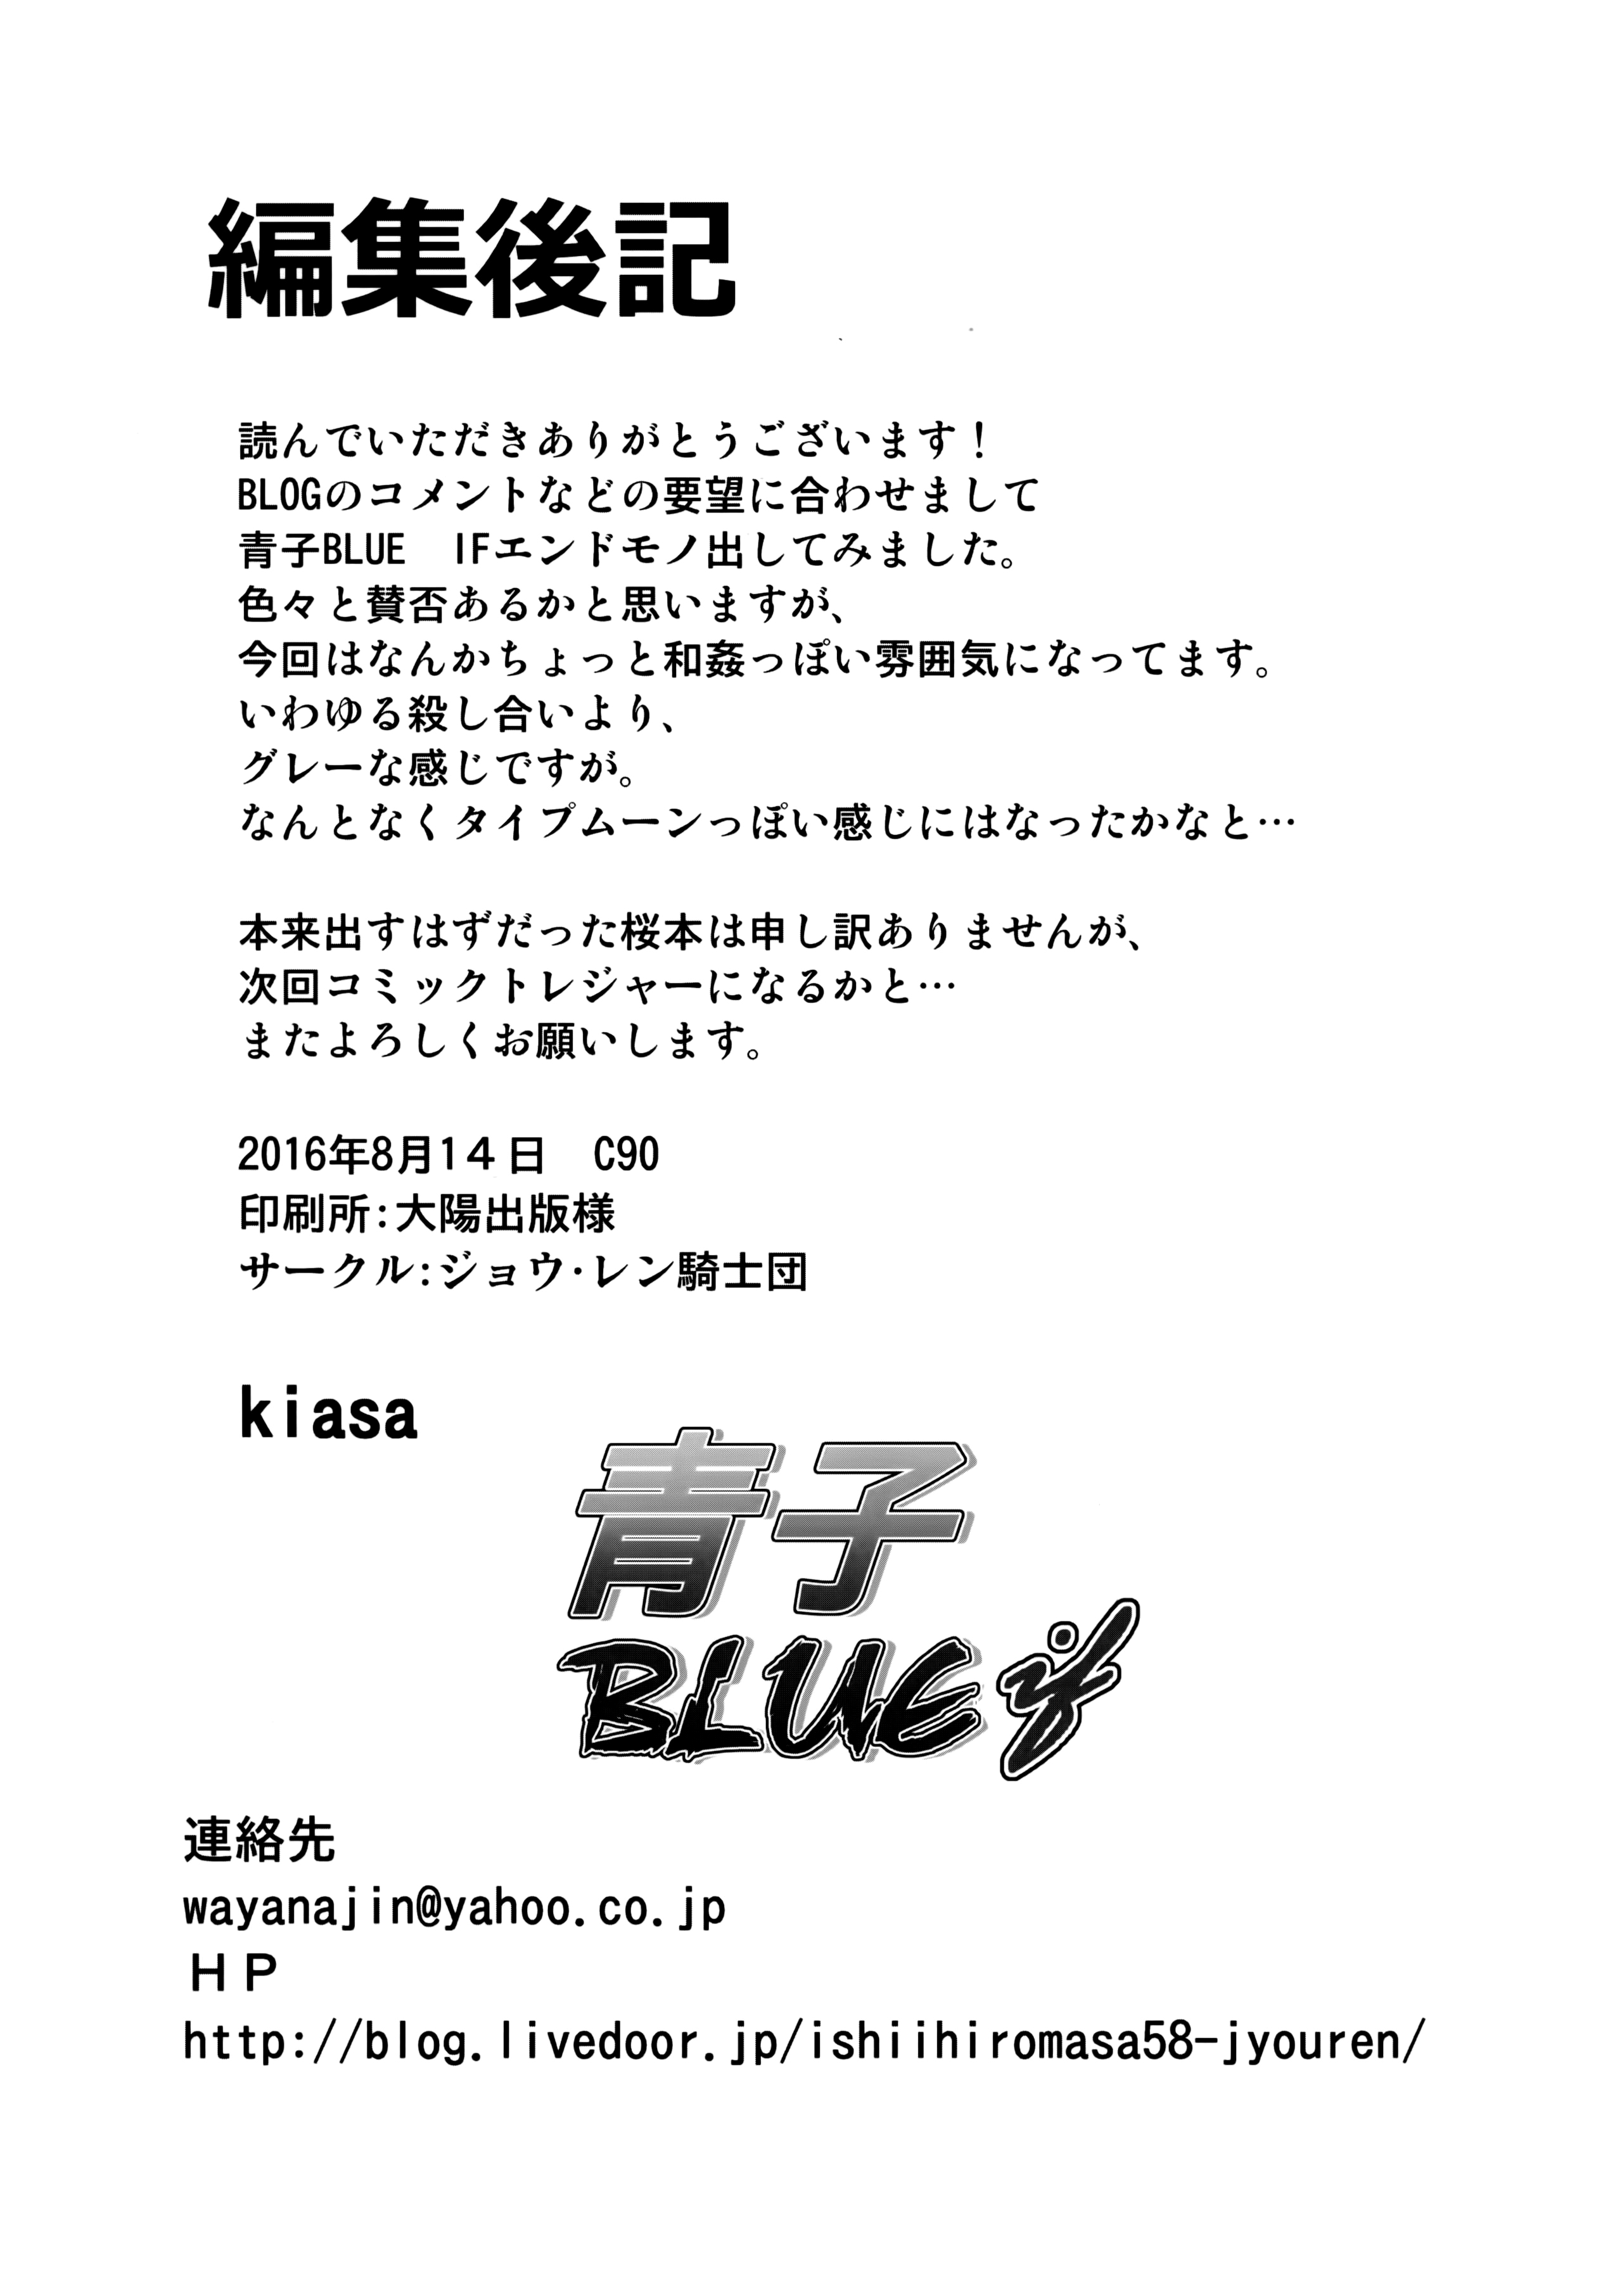 Aoko Blue IF